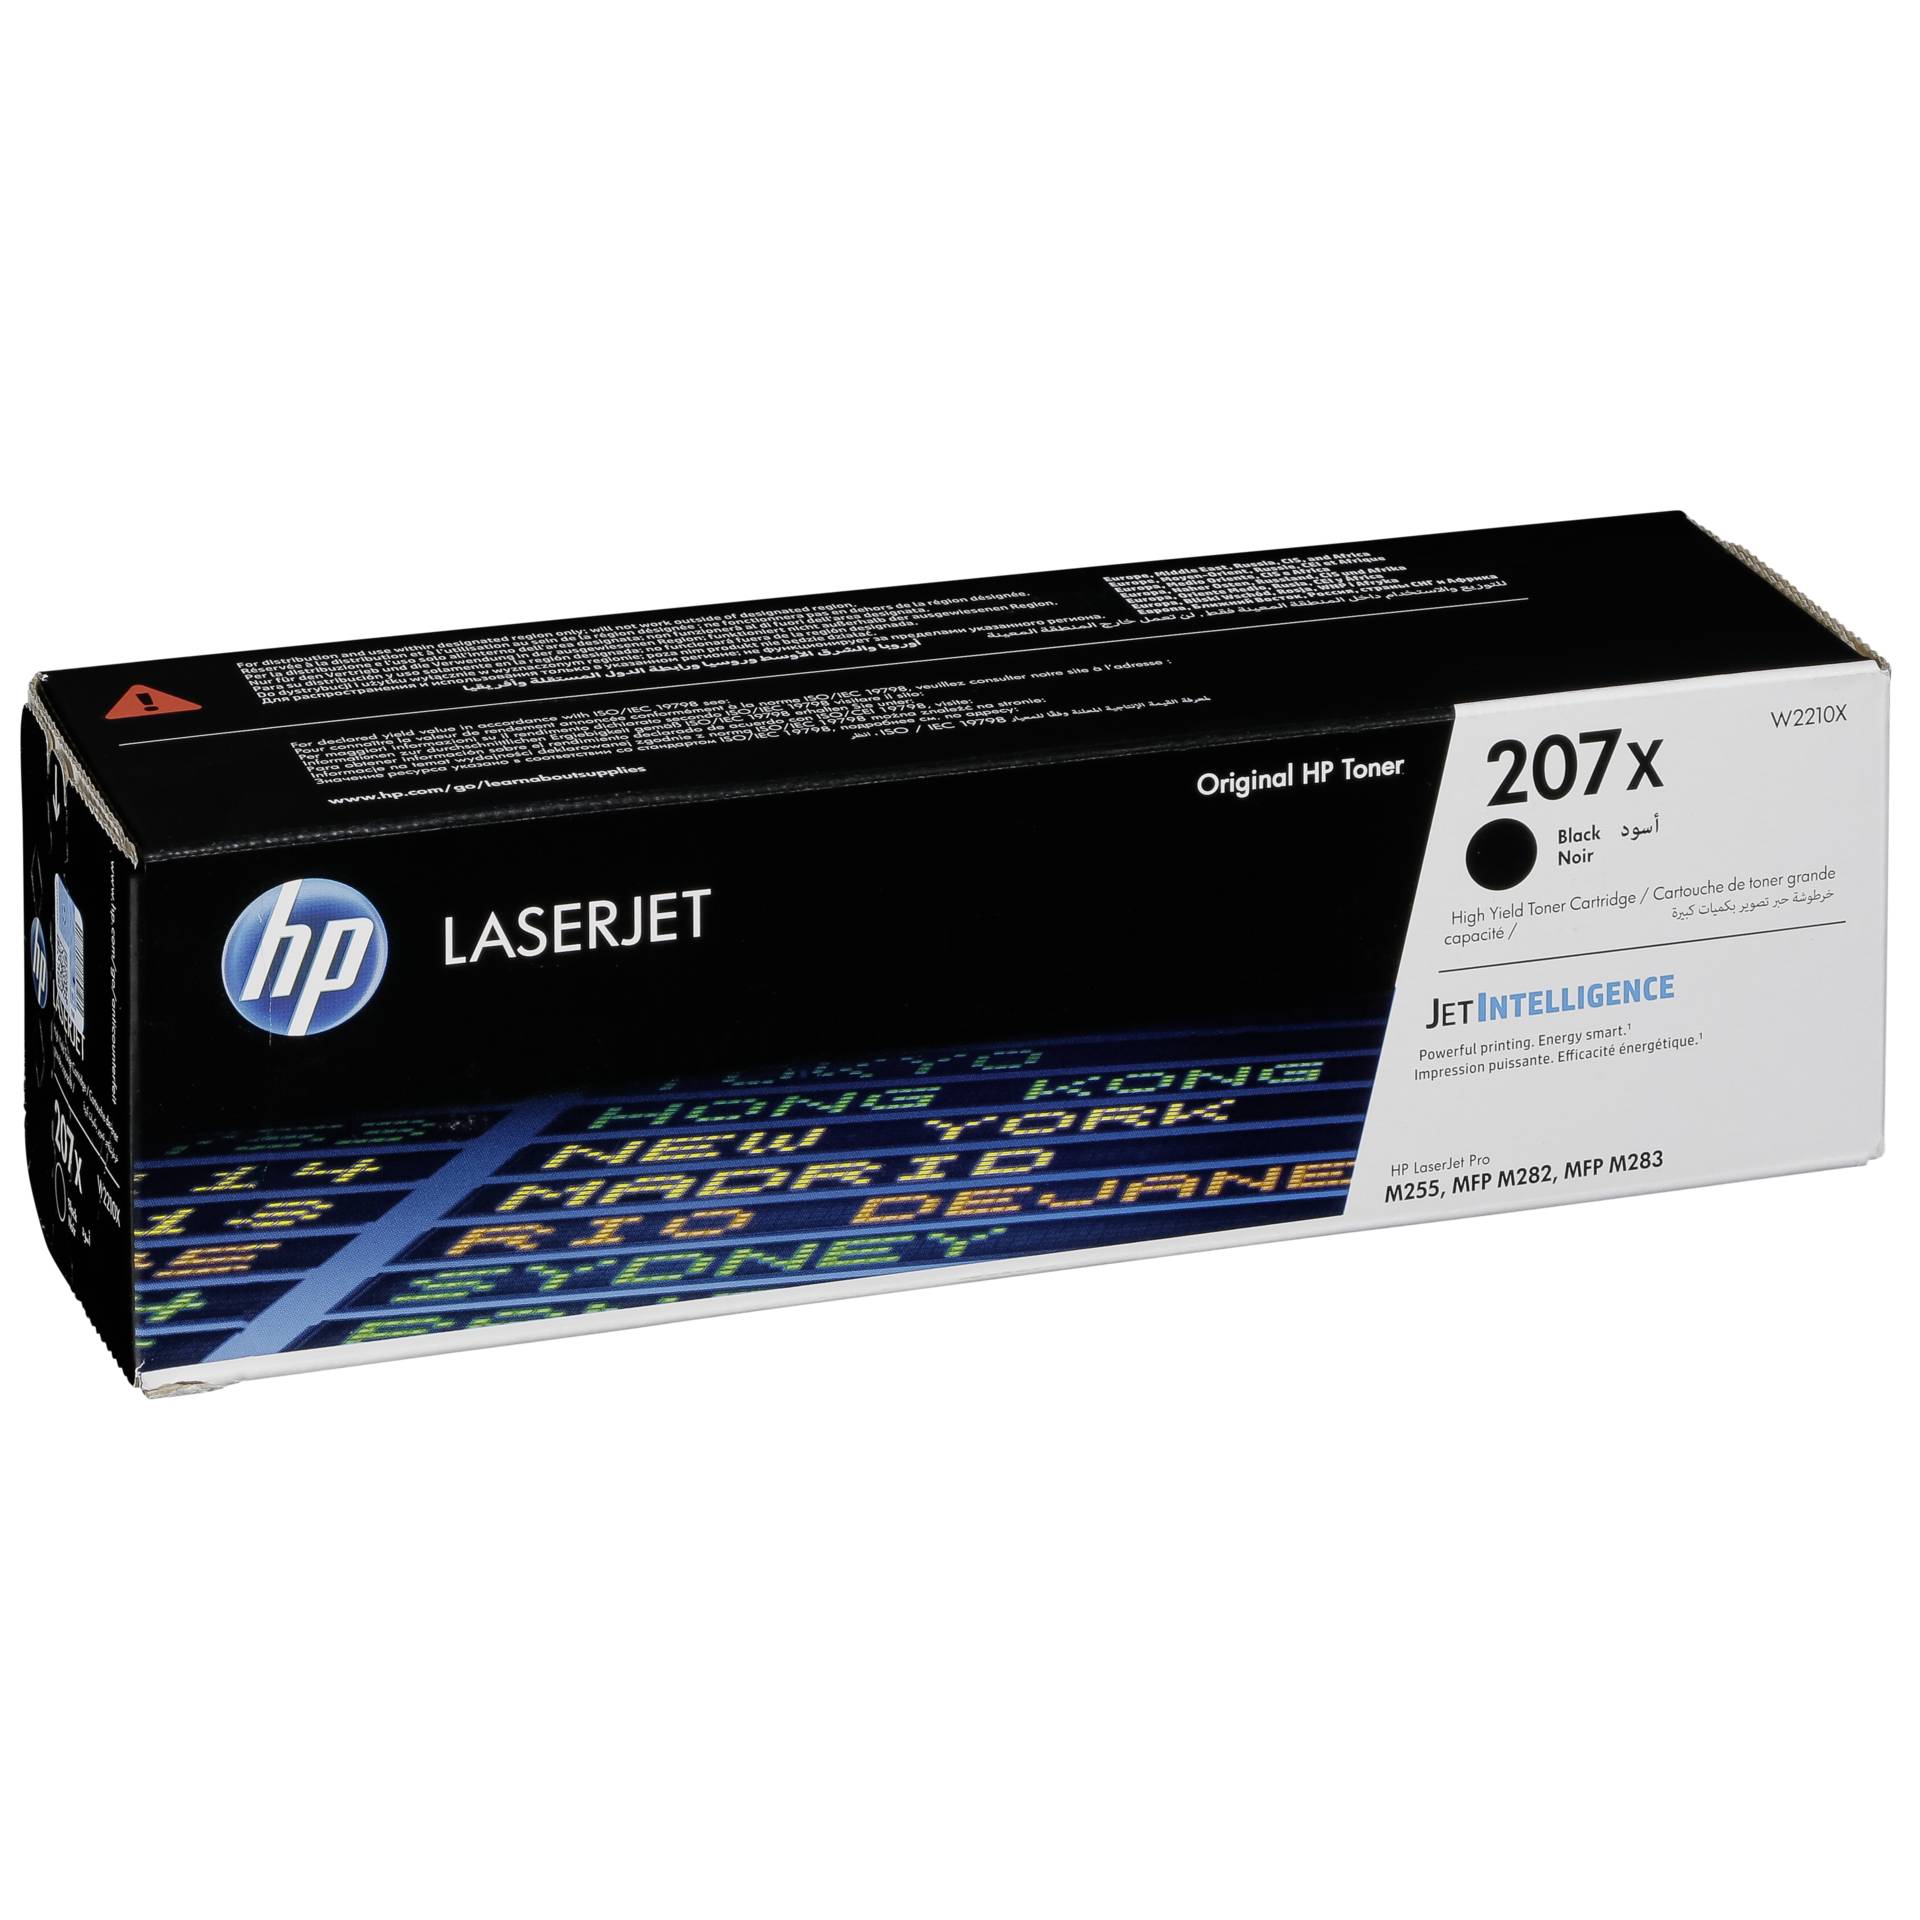 HP Toner 207X schwarz hohe Kapazität Original 3150 Seiten